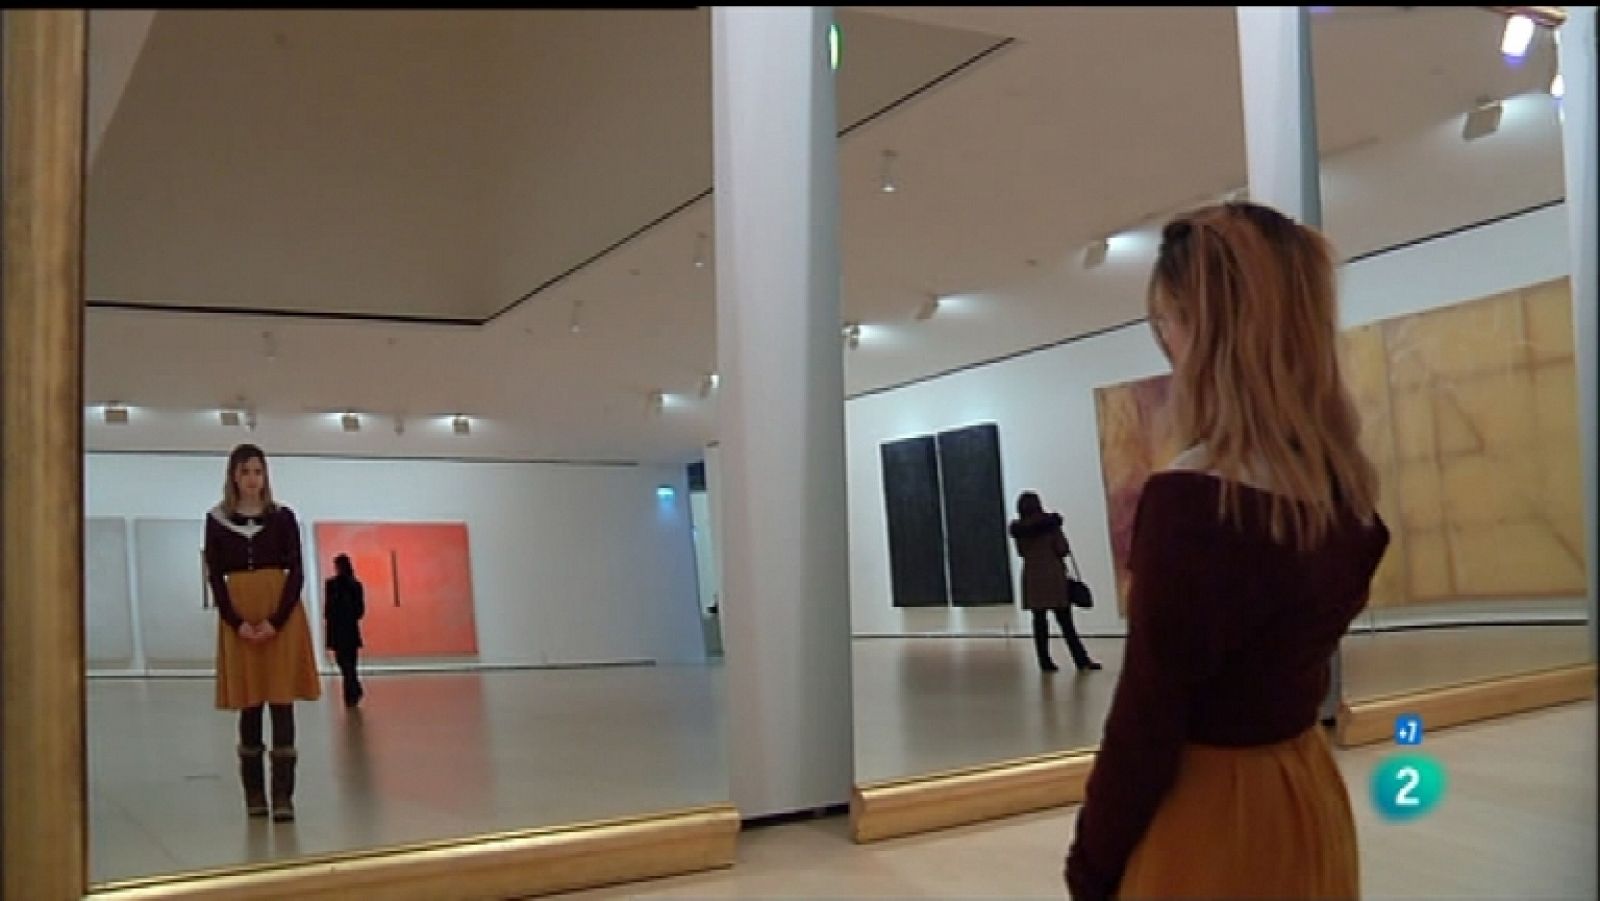 La sala - Guggenheim - El espejo invertido